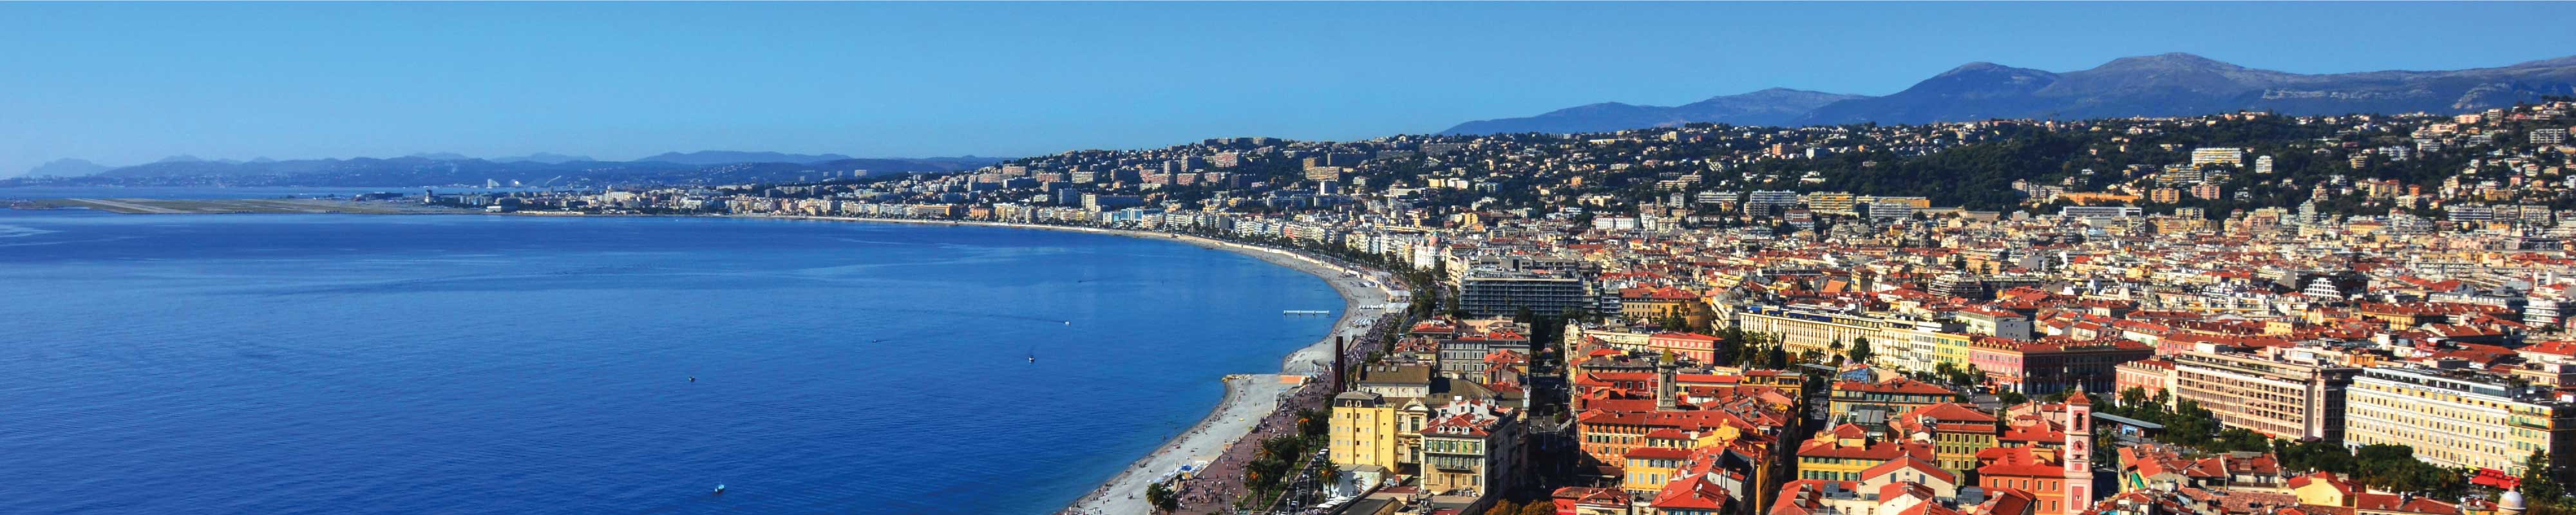 Luggage Storage | Promenade des Anglais in Nice - Nannybag